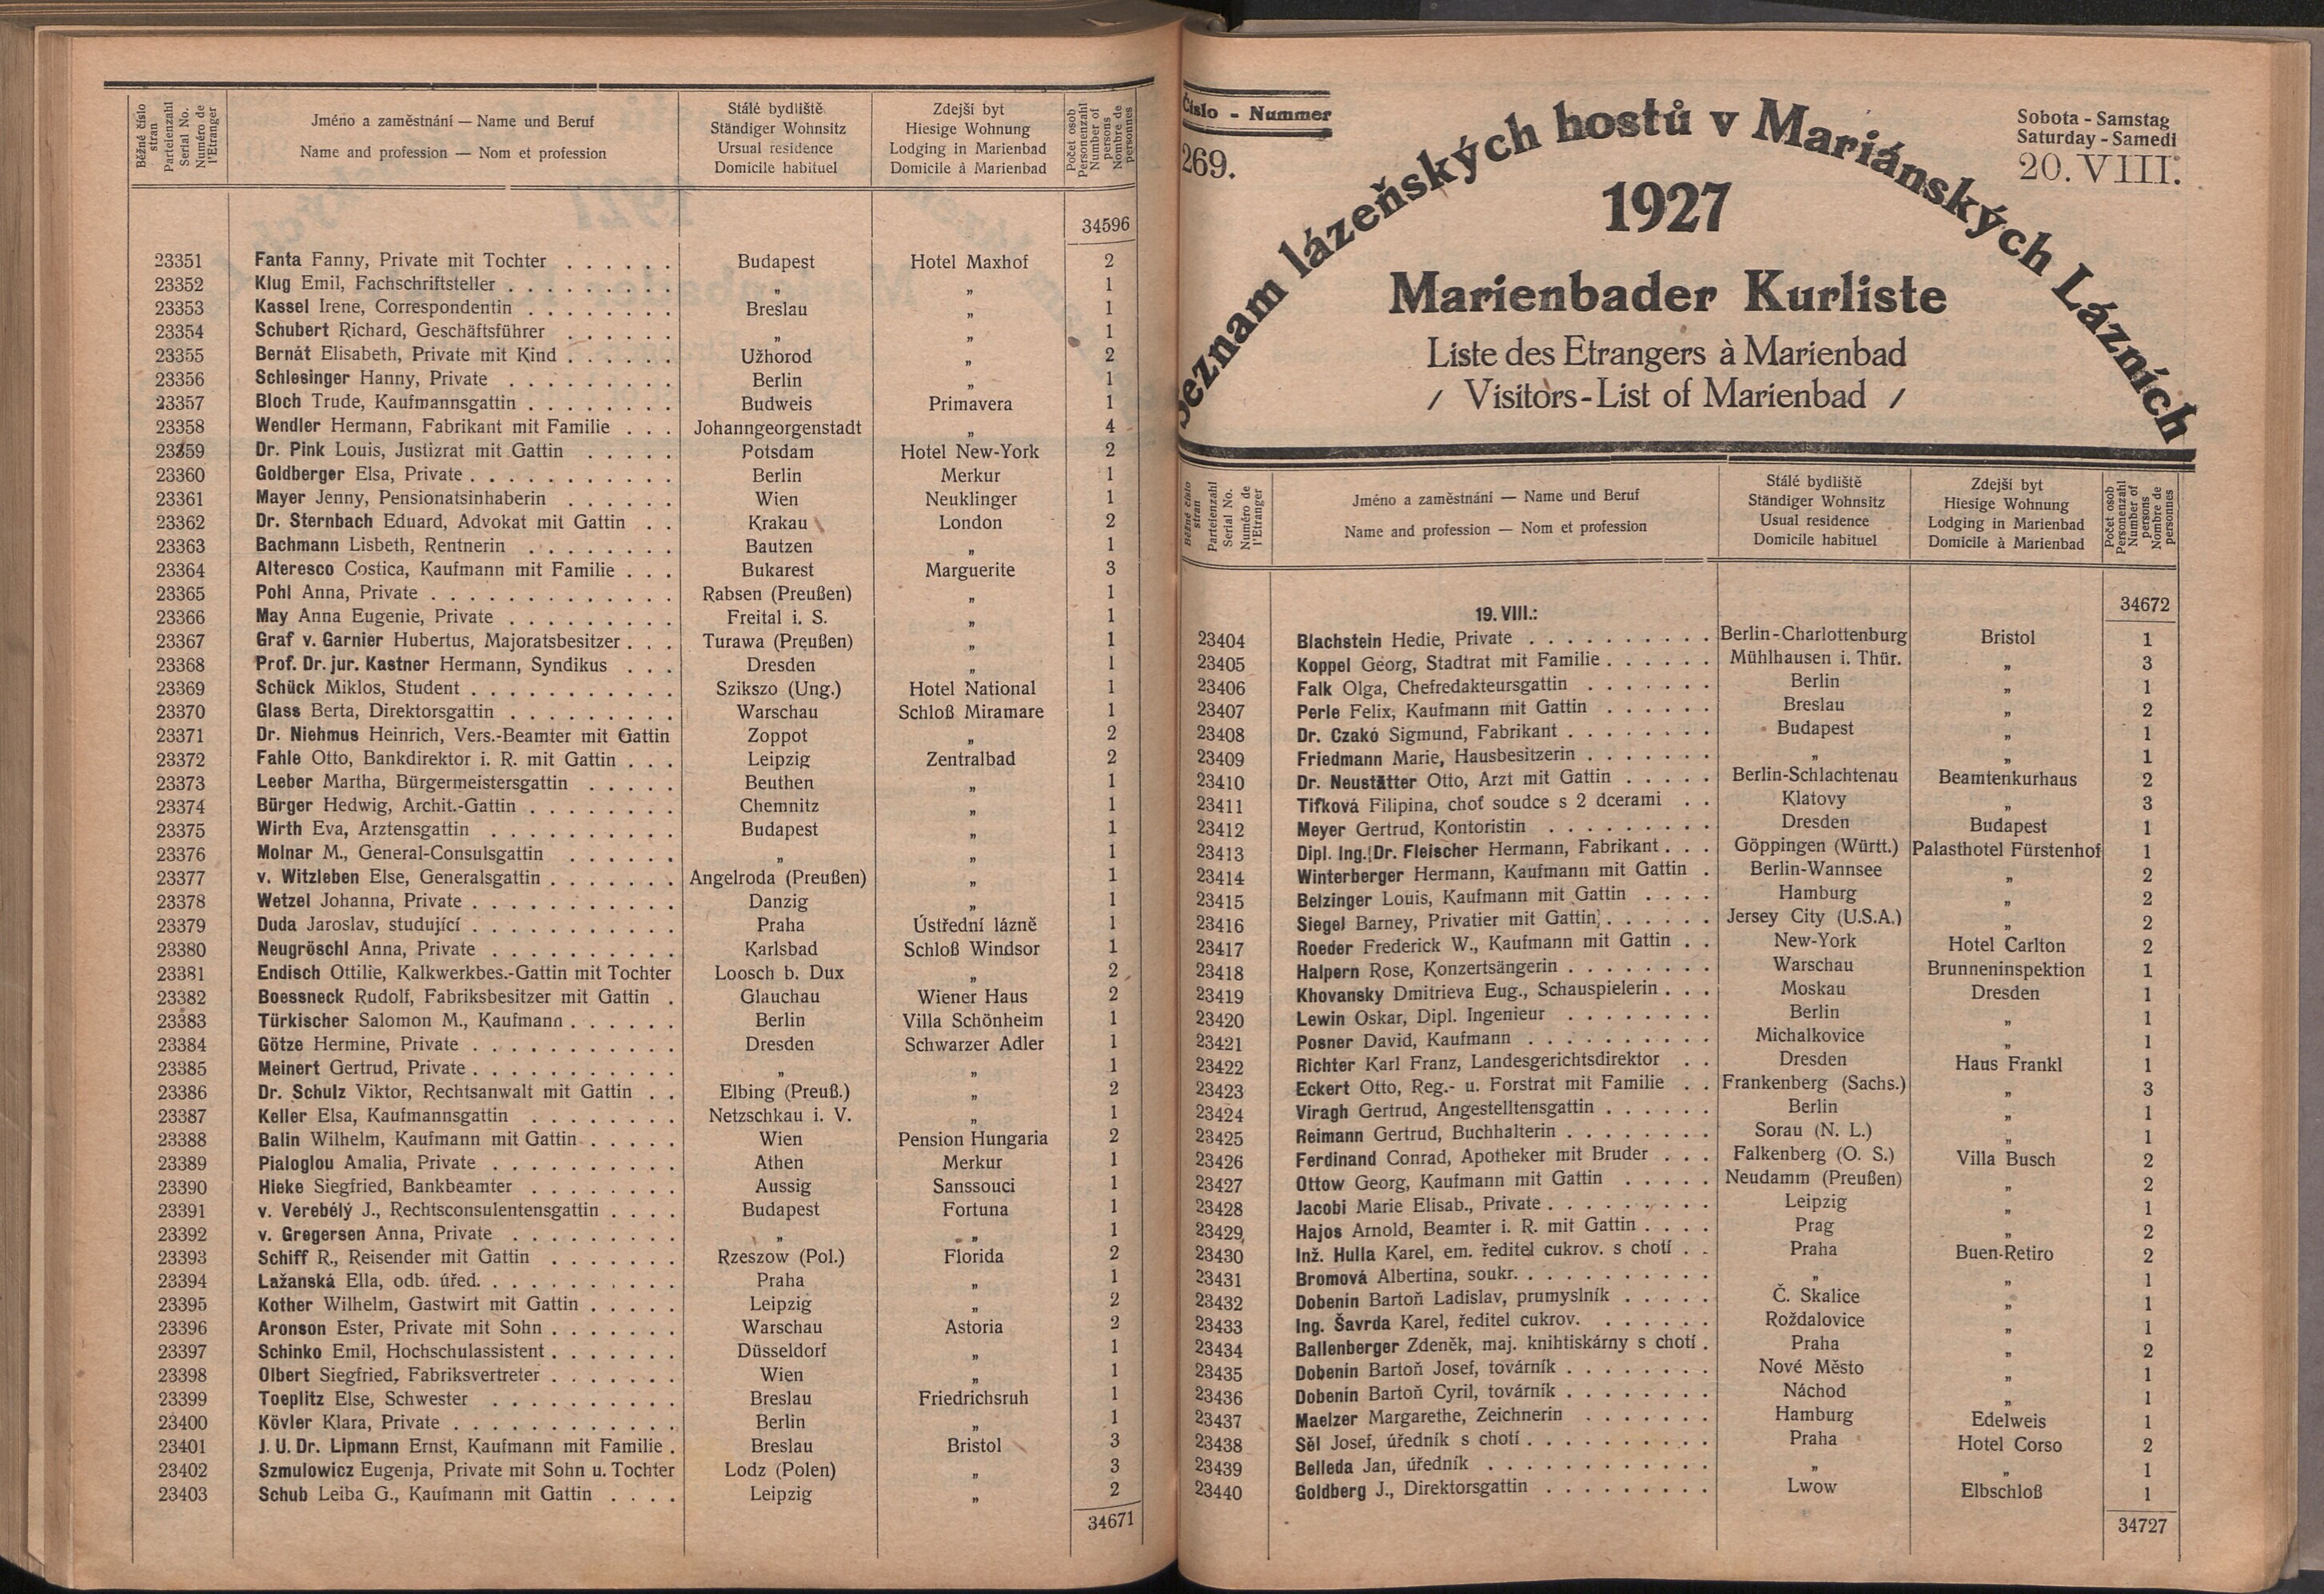 350. soap-ch_knihovna_marienbader-kurliste-1927_3500